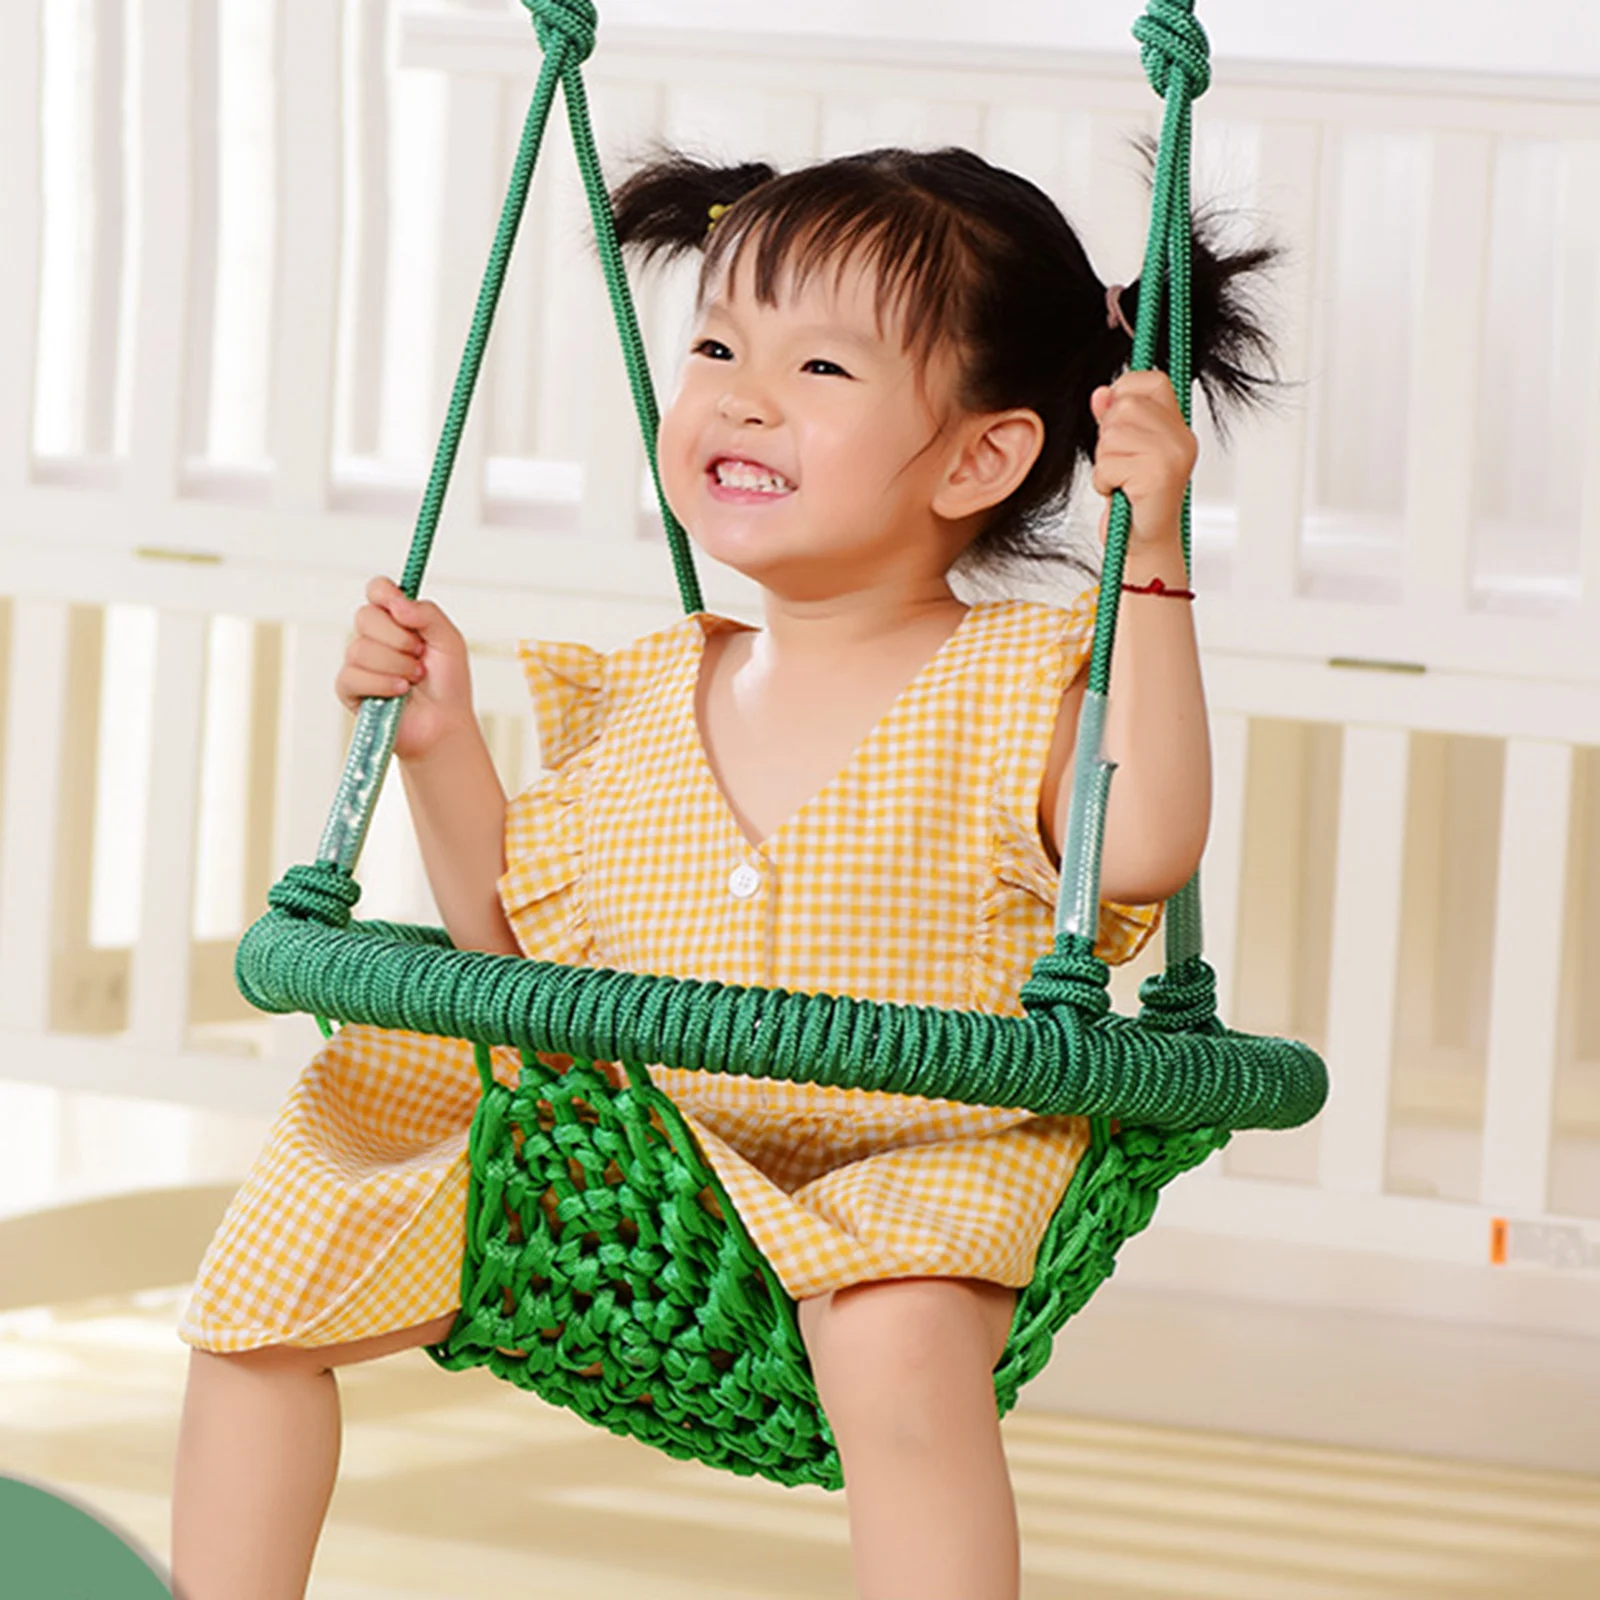 Kids Swing Set Hand-Knitting Swing Seat Chair w/ Hooks Portable Easy Design Home Playset Swingset Fun Play Toy Decor